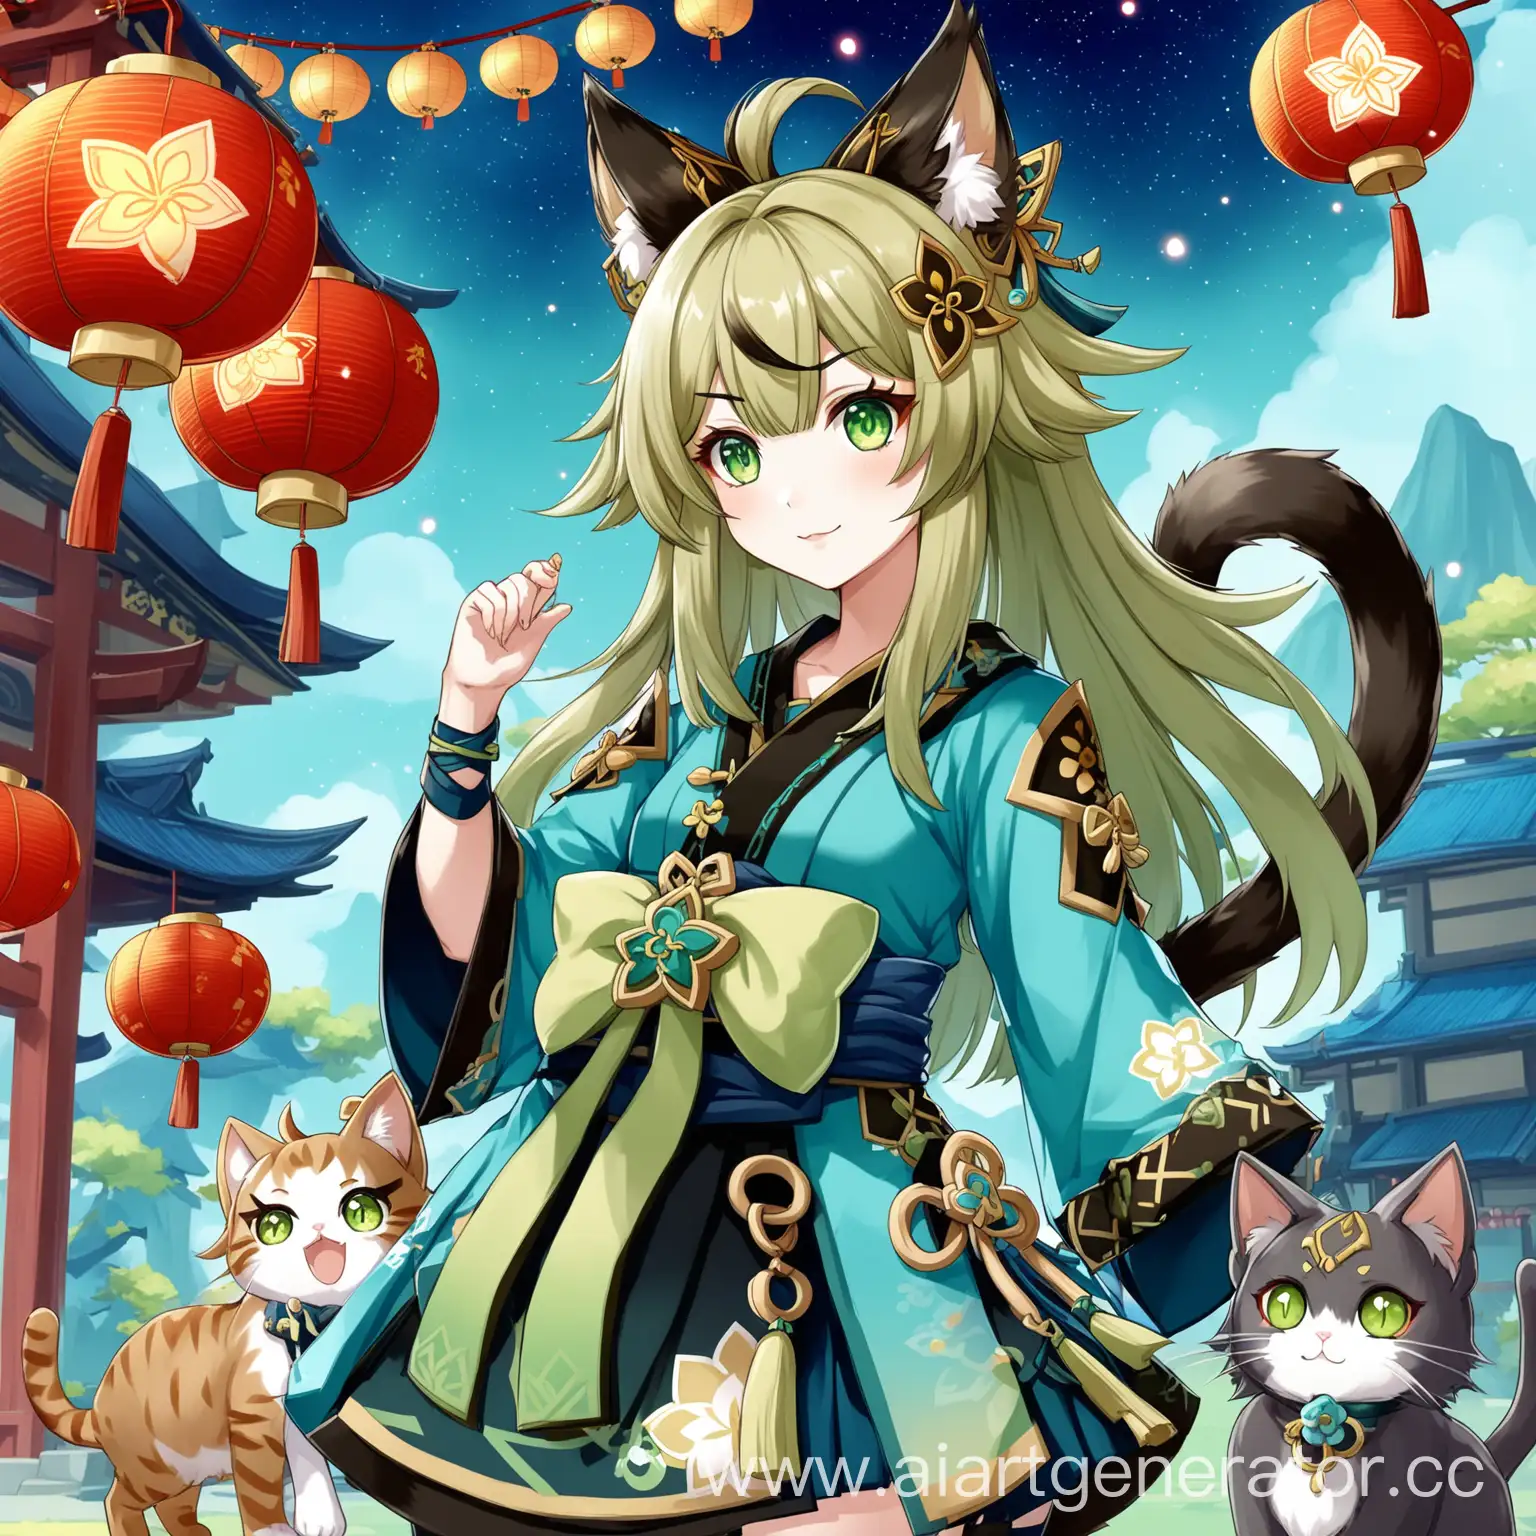 Kirara-from-Genshin-Impact-Enjoying-a-Festival-Night-with-Cat-Ears-and-Lanterns